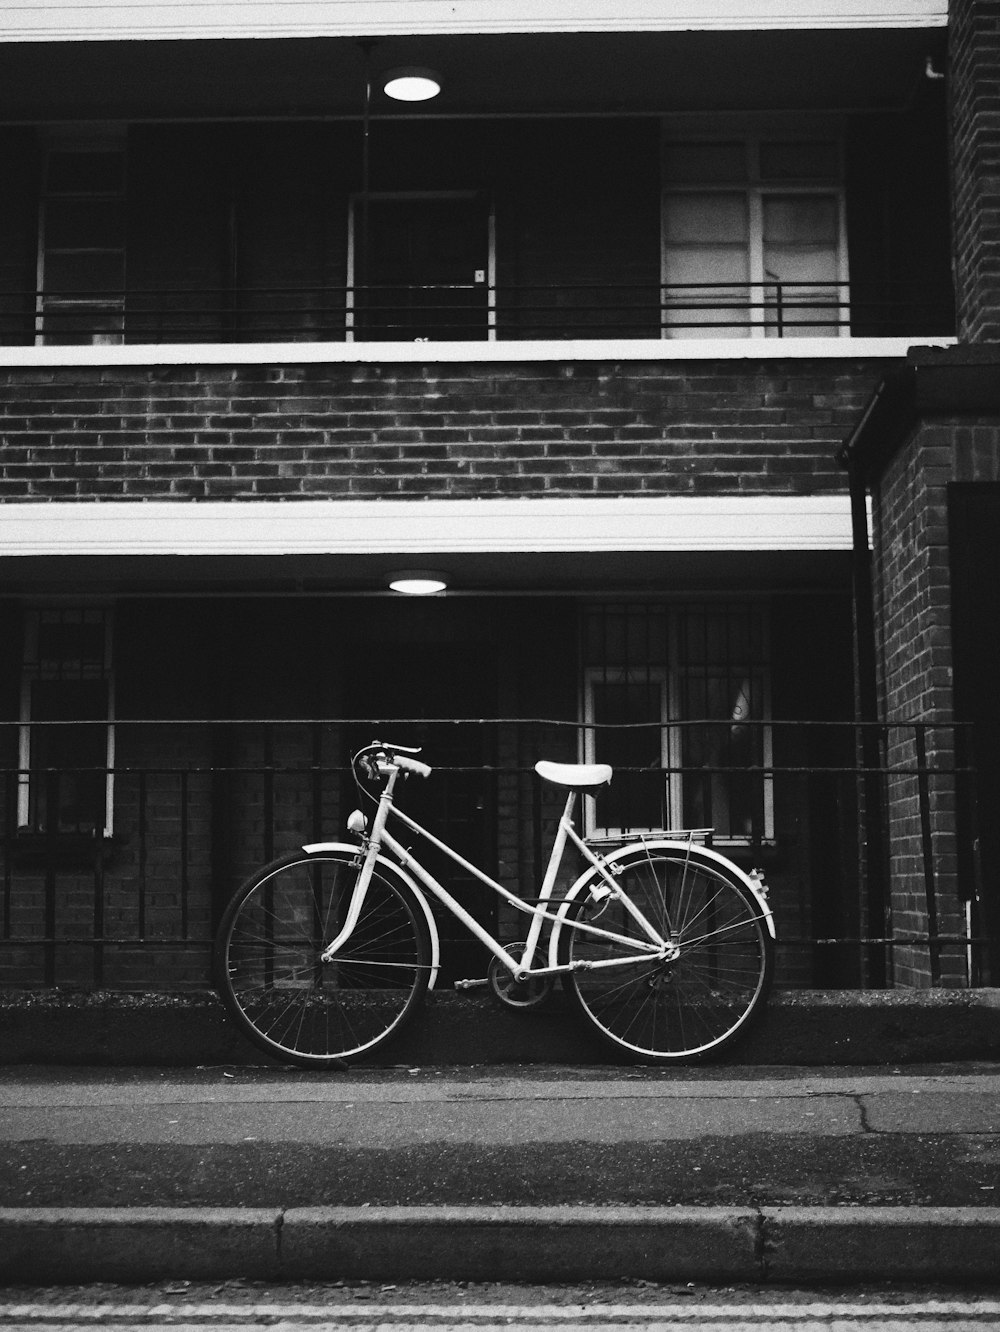 bicycle parked near metal railings